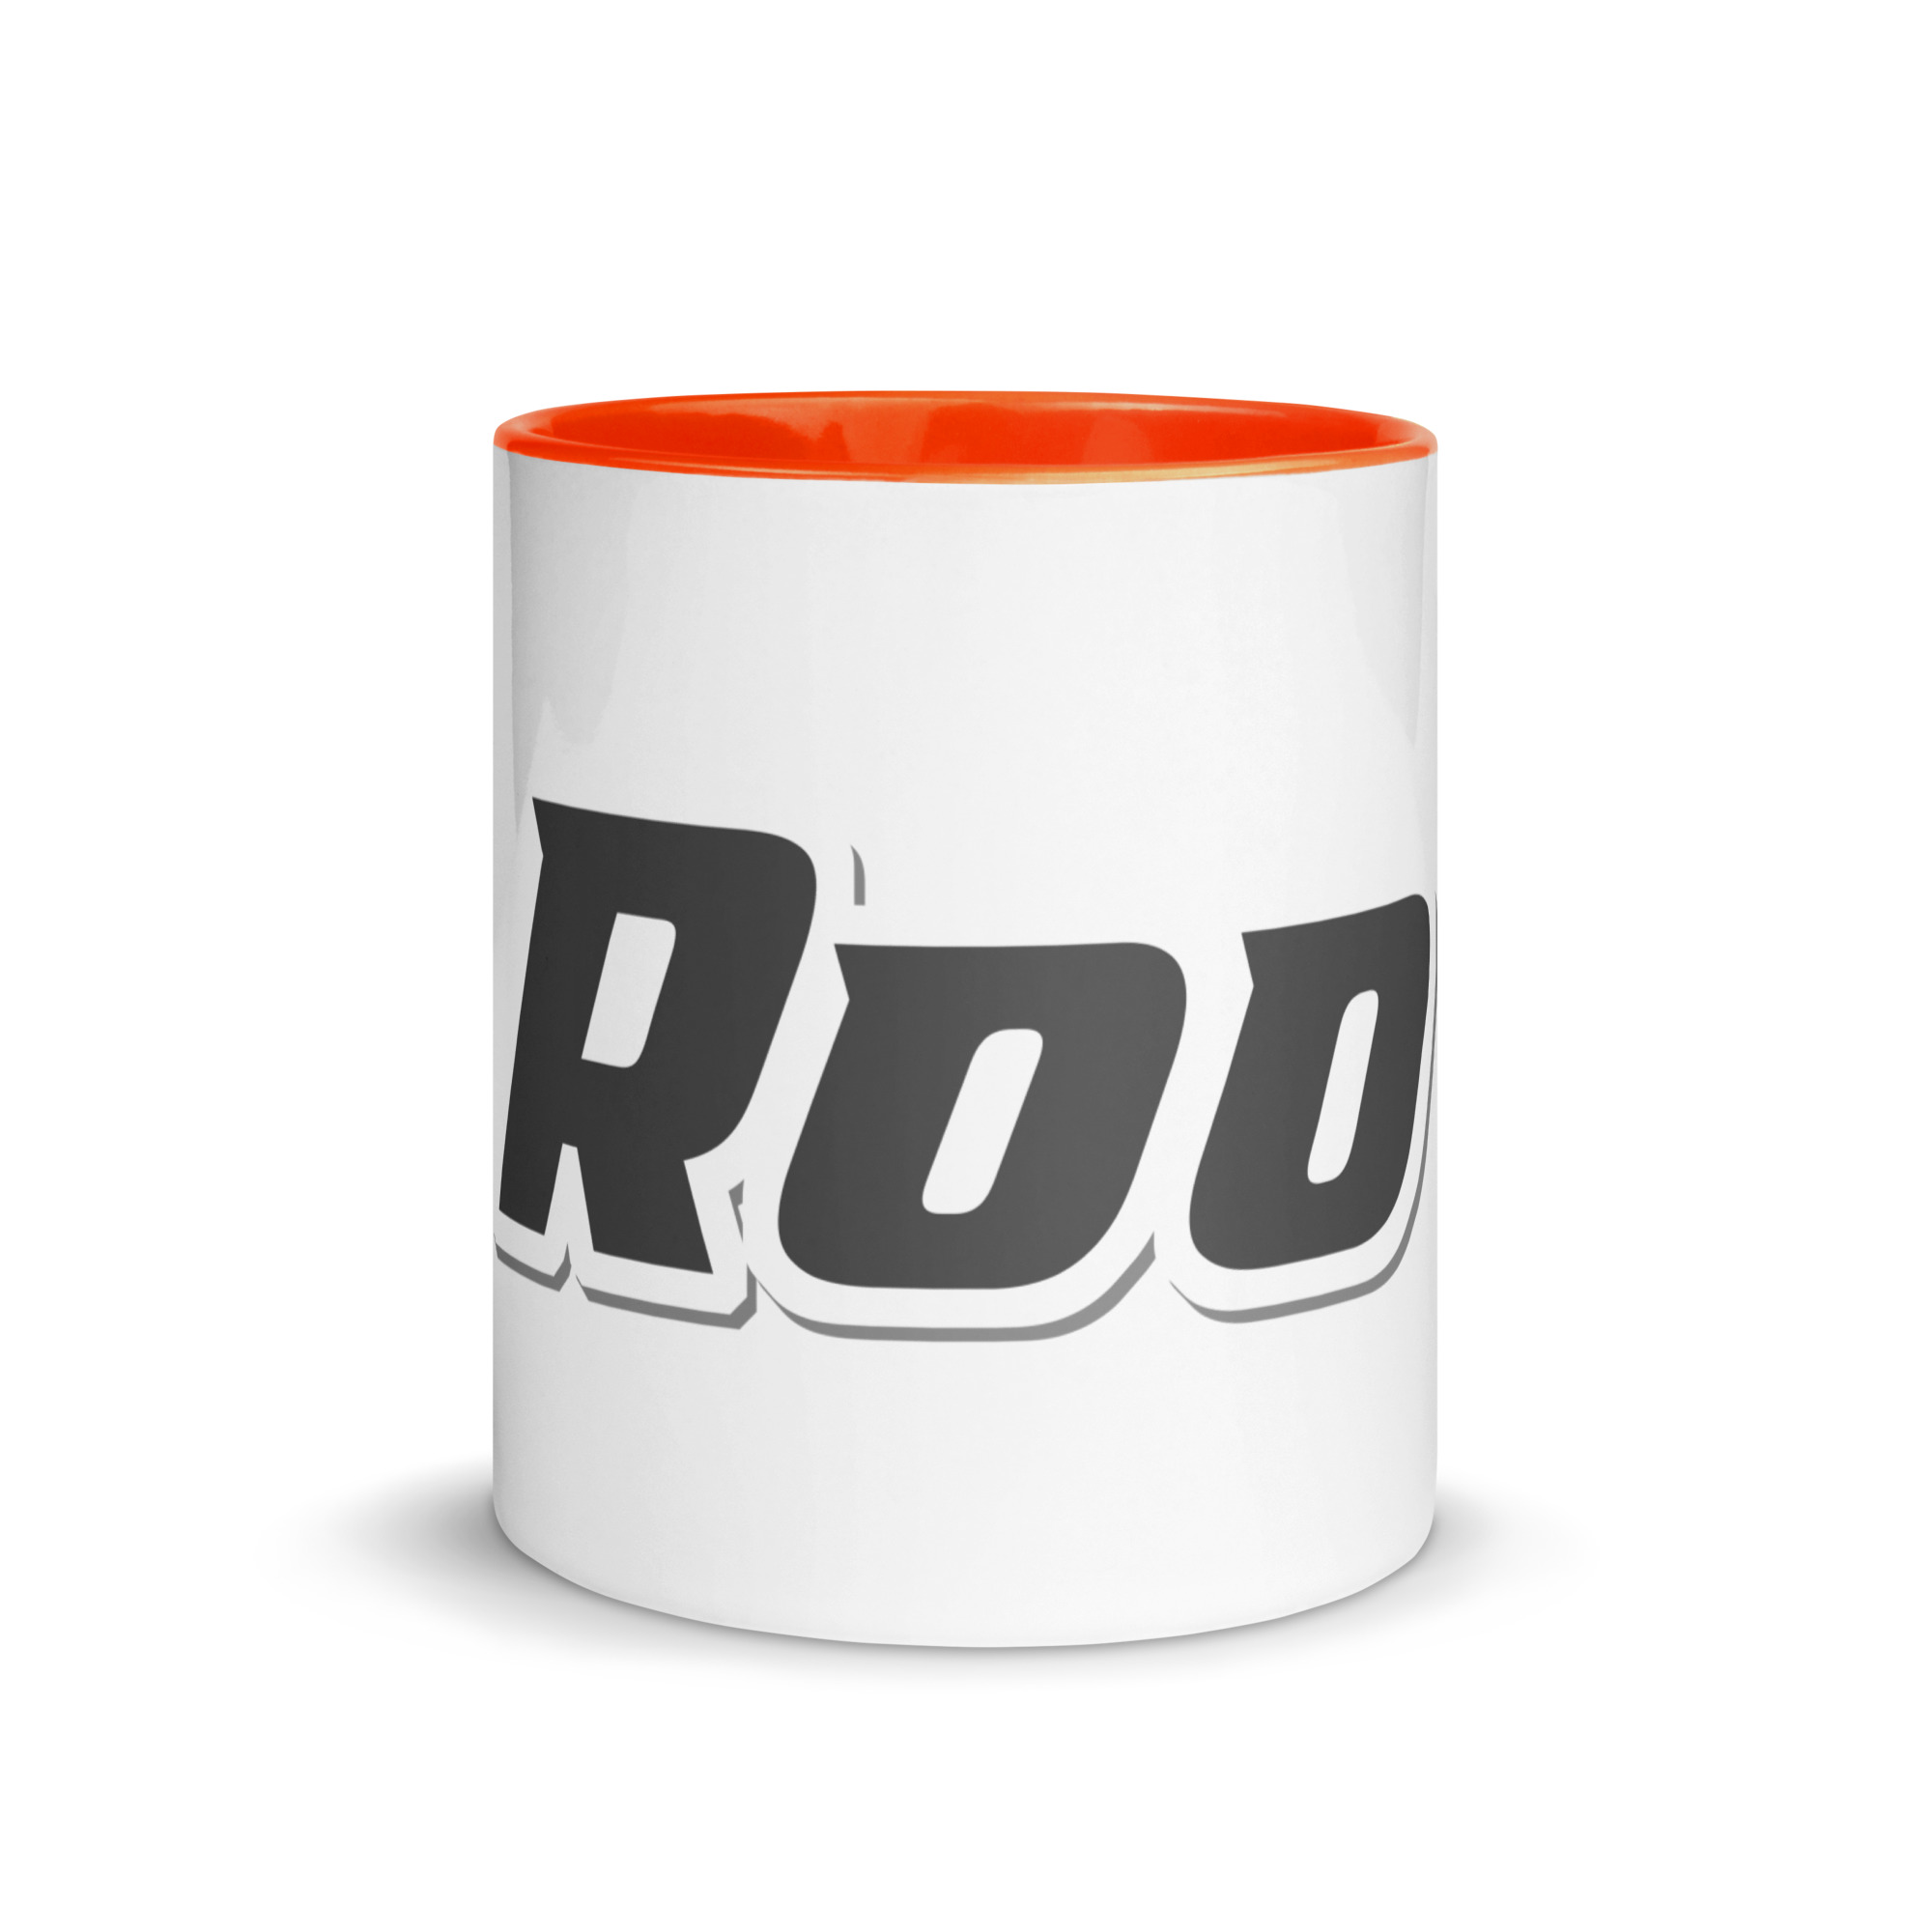 white-ceramic-mug-with-color-inside-orange-11-oz-front-6525b50608f3f.jpg